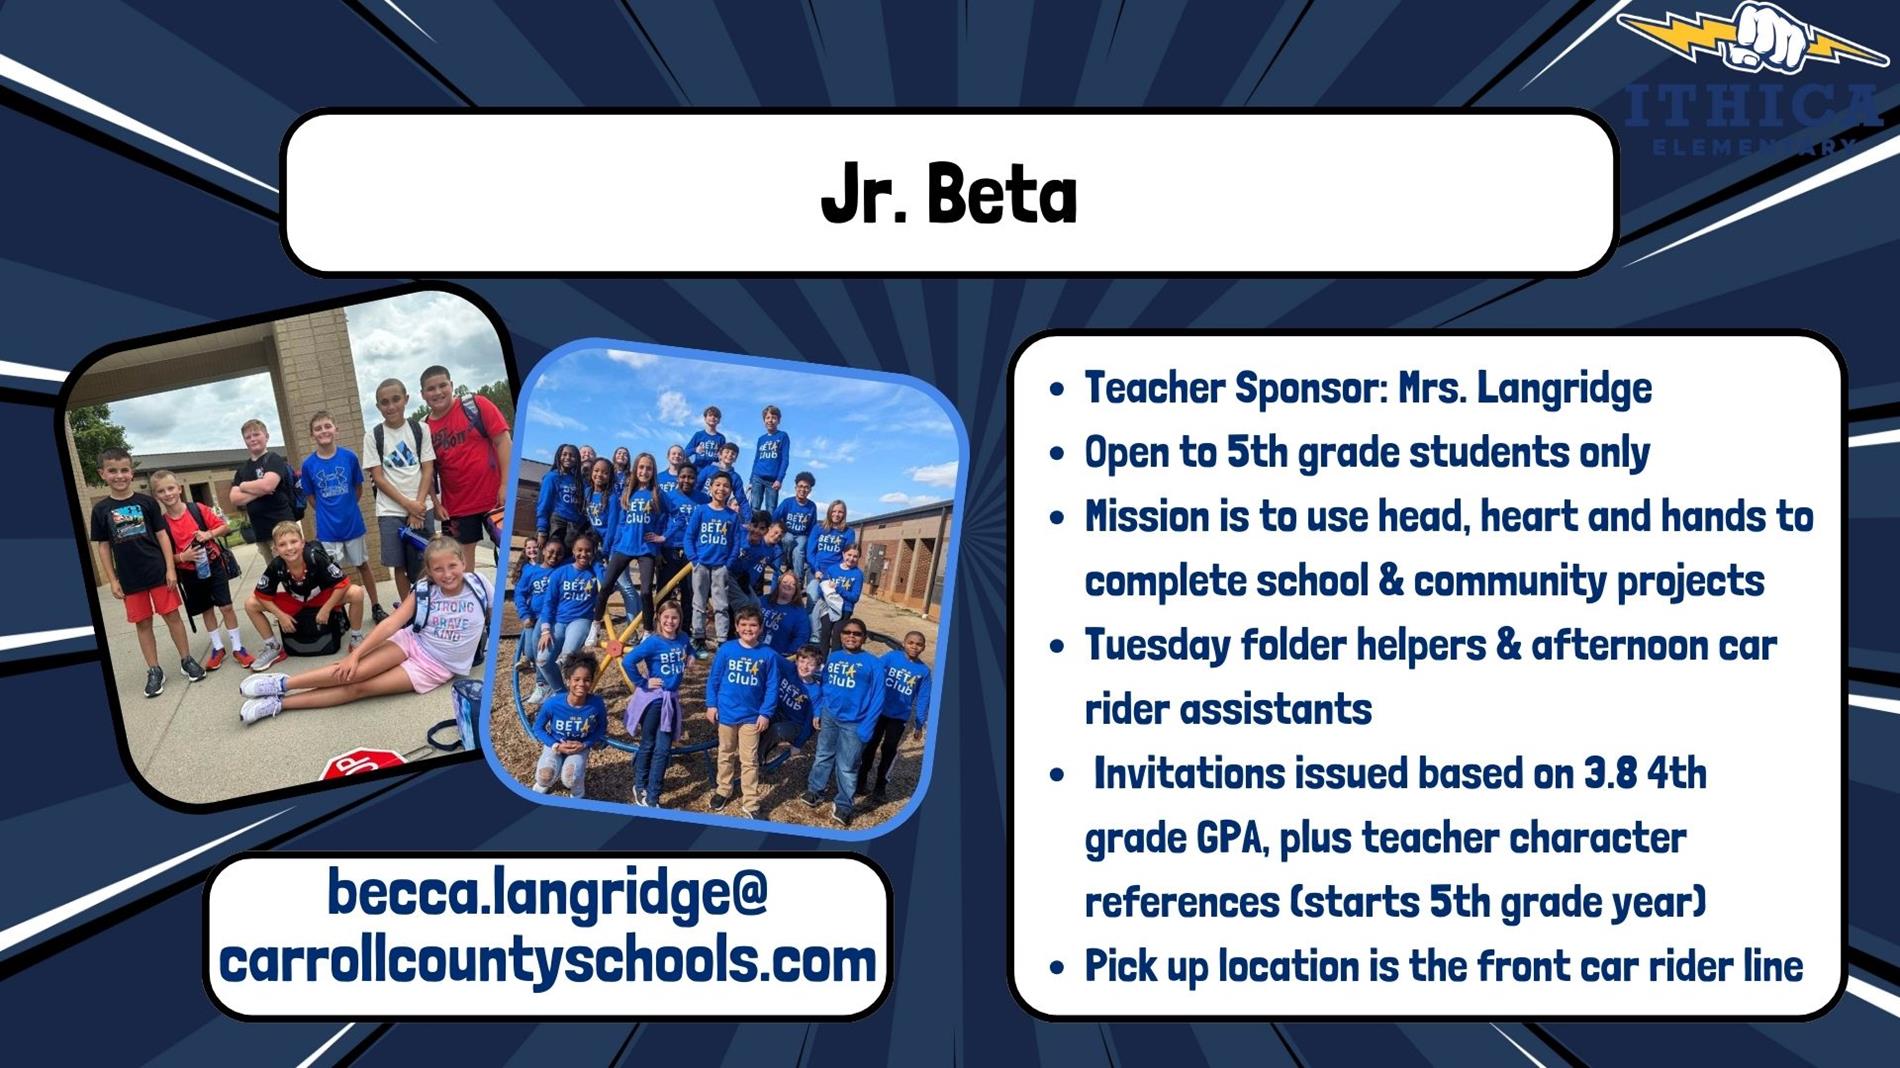 information about Junior Beta club